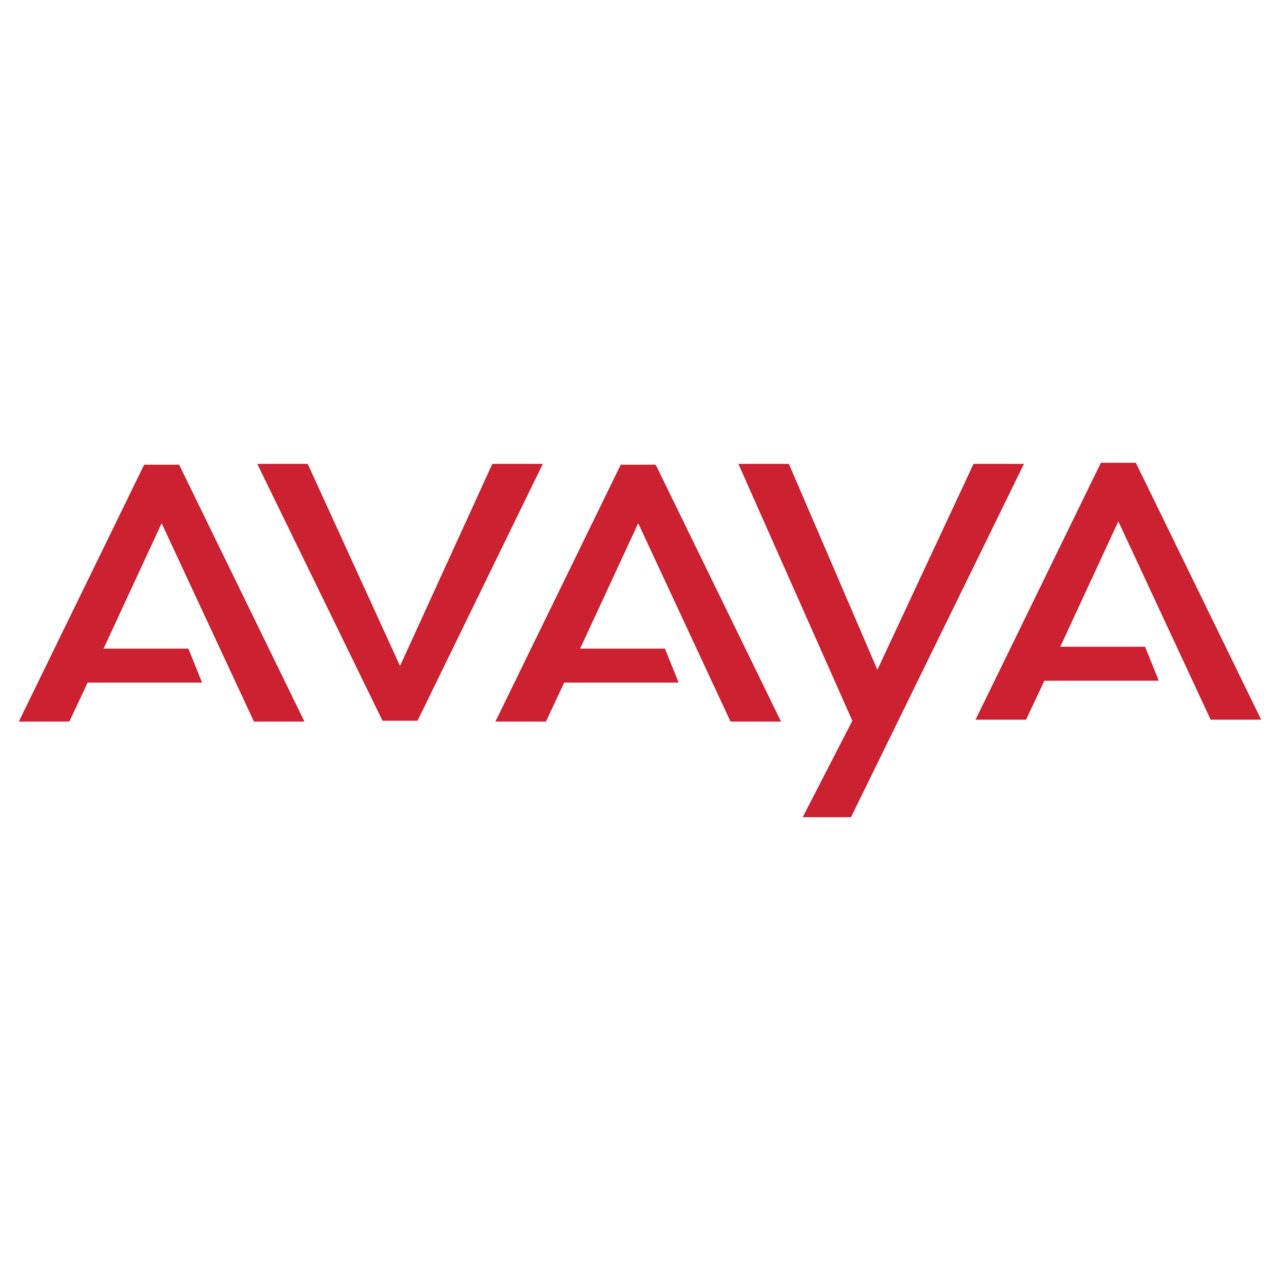 Avaya Cloud Office